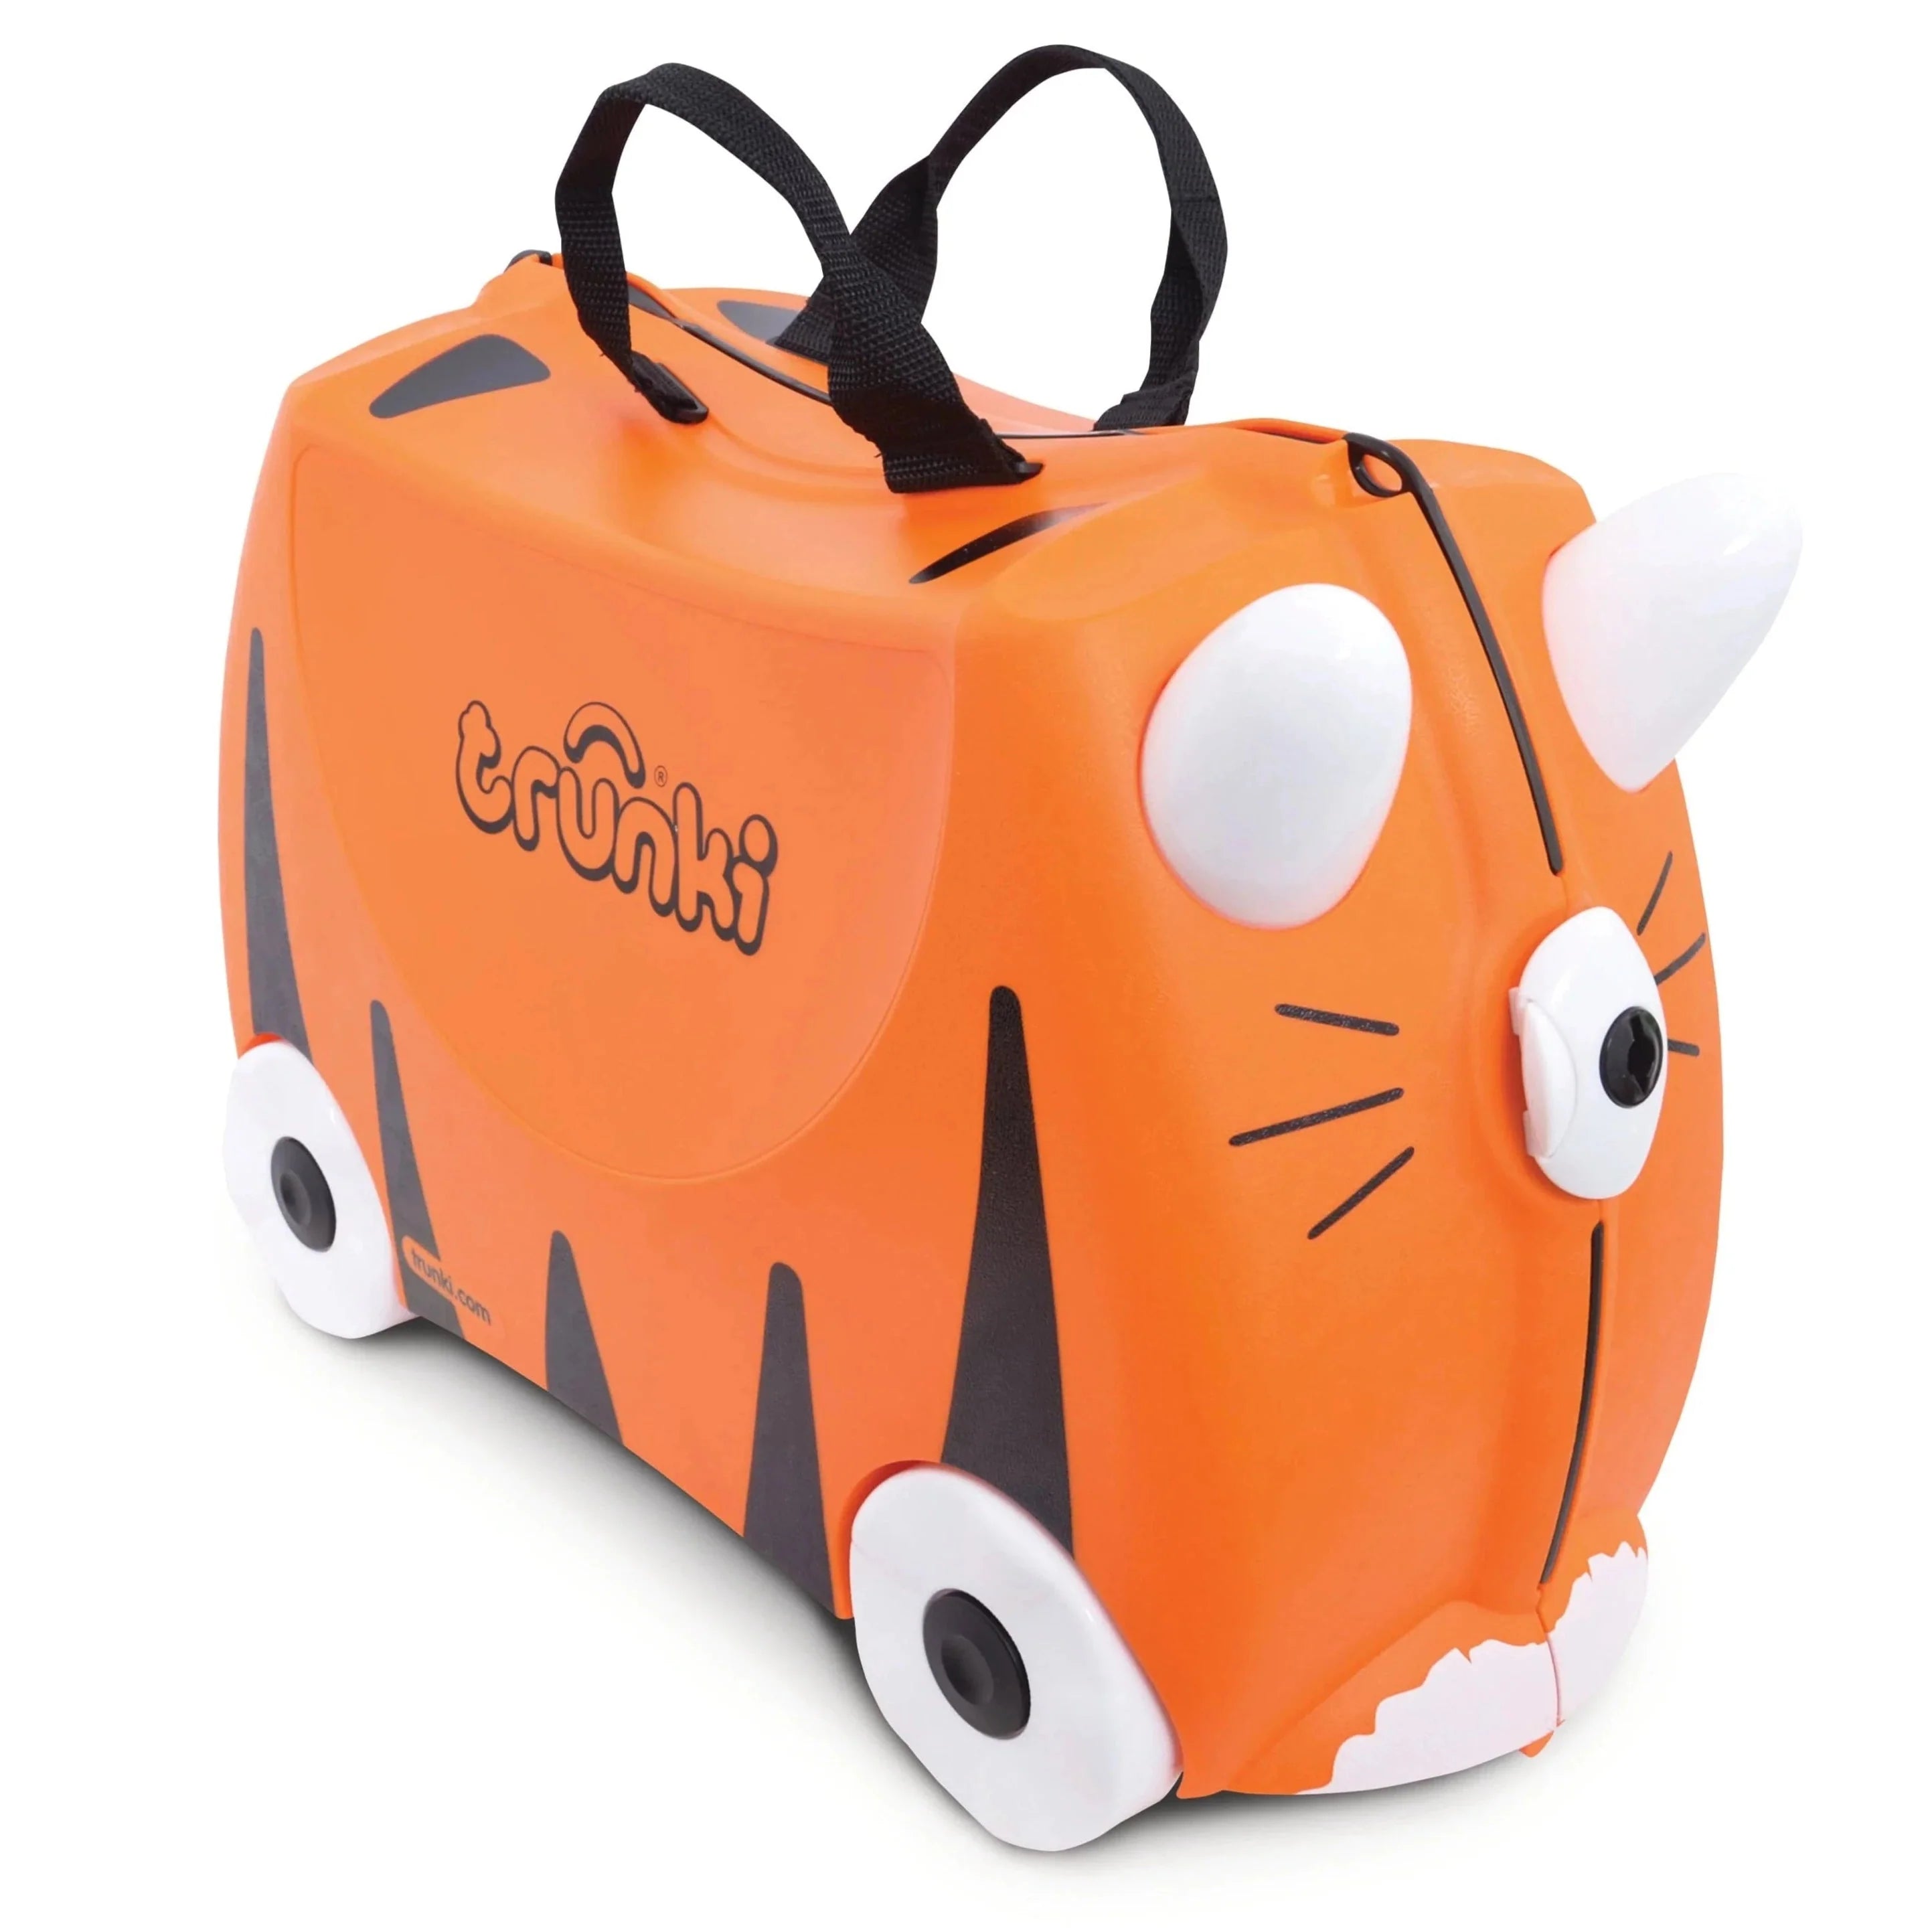 Trunki: Tipu tiger riding suitcase for kids